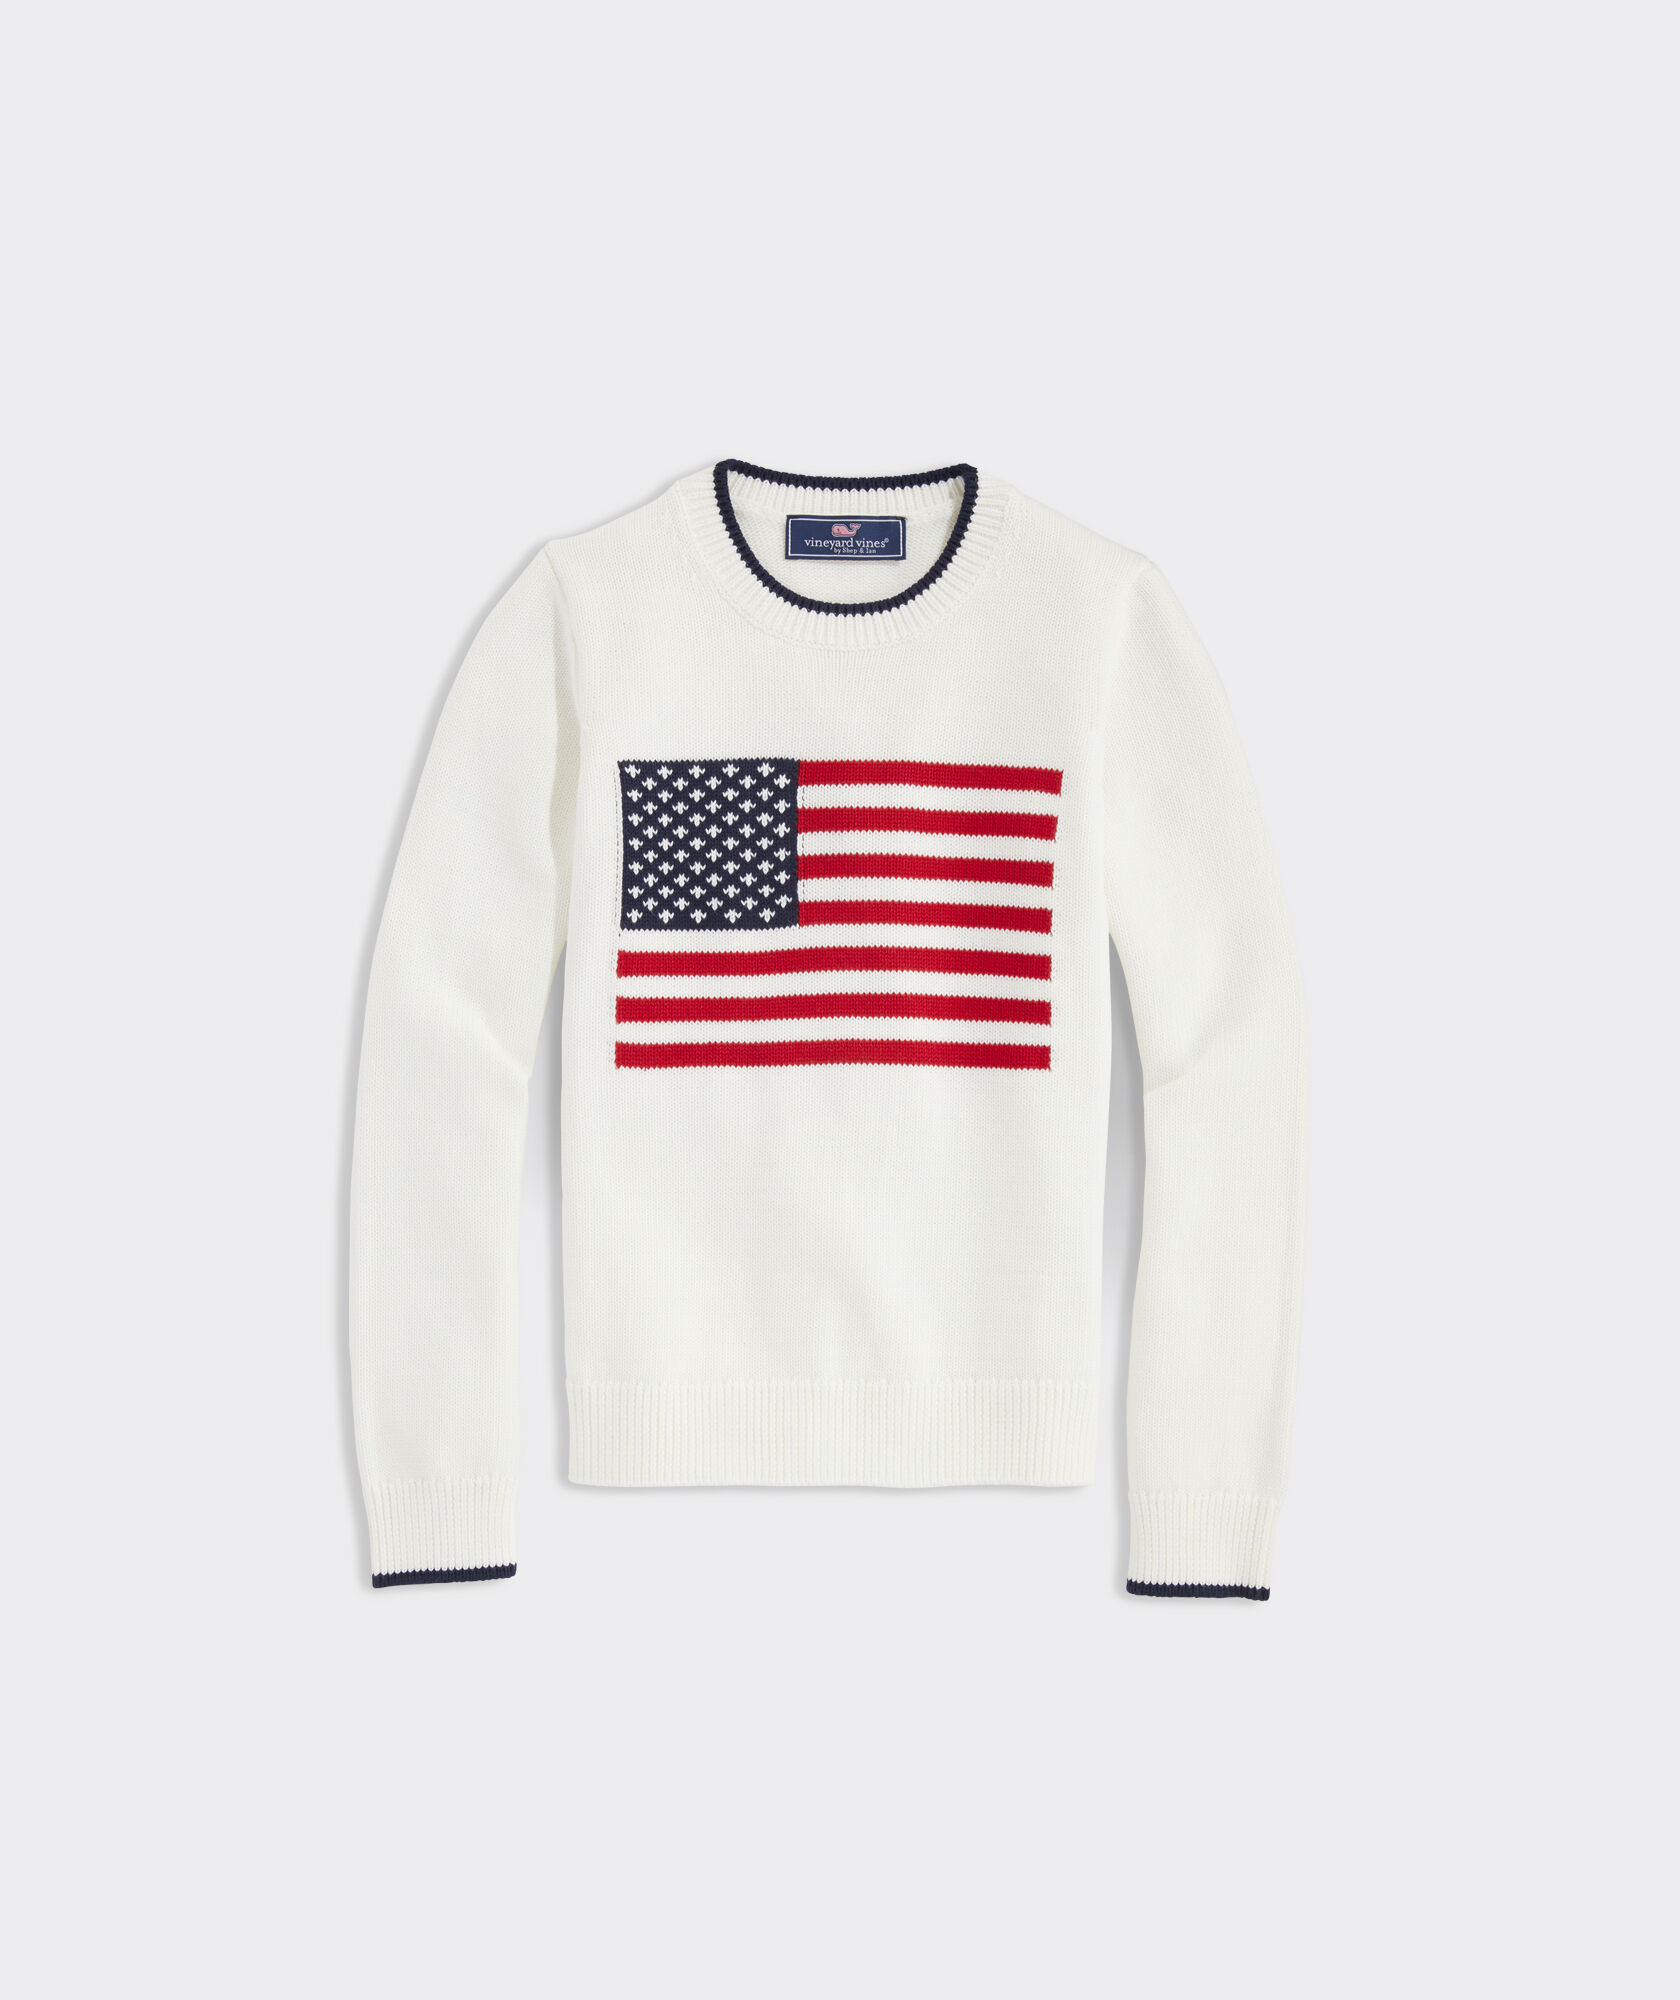 Boys' American Flag Cotton Crewneck Sweater